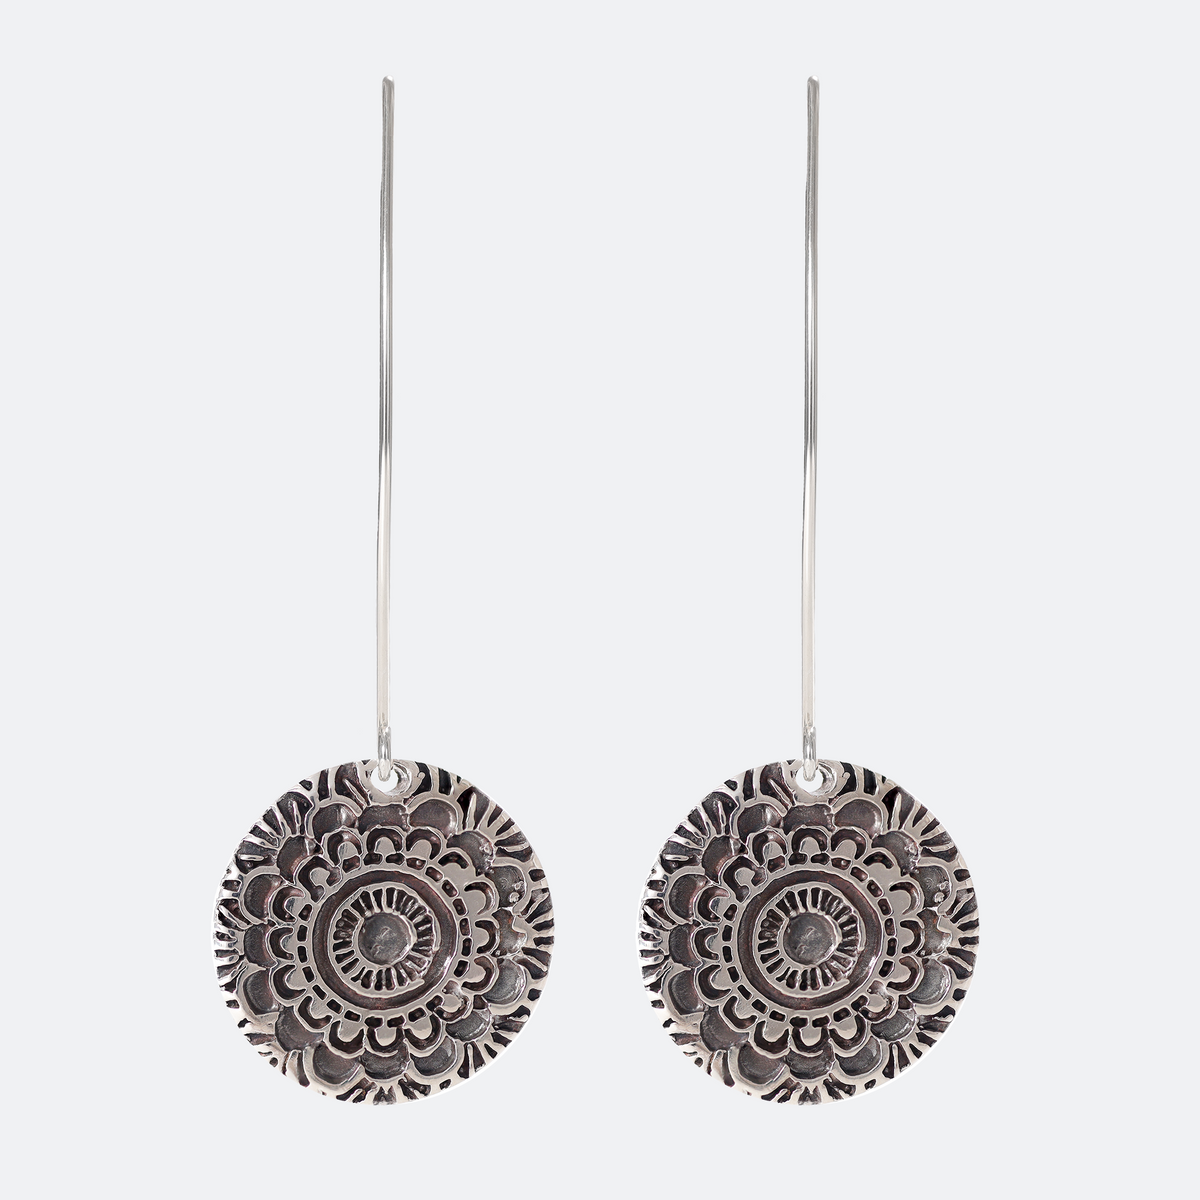 Mandala Textured Large Sterling Silver Earrings on Long Ear Wires